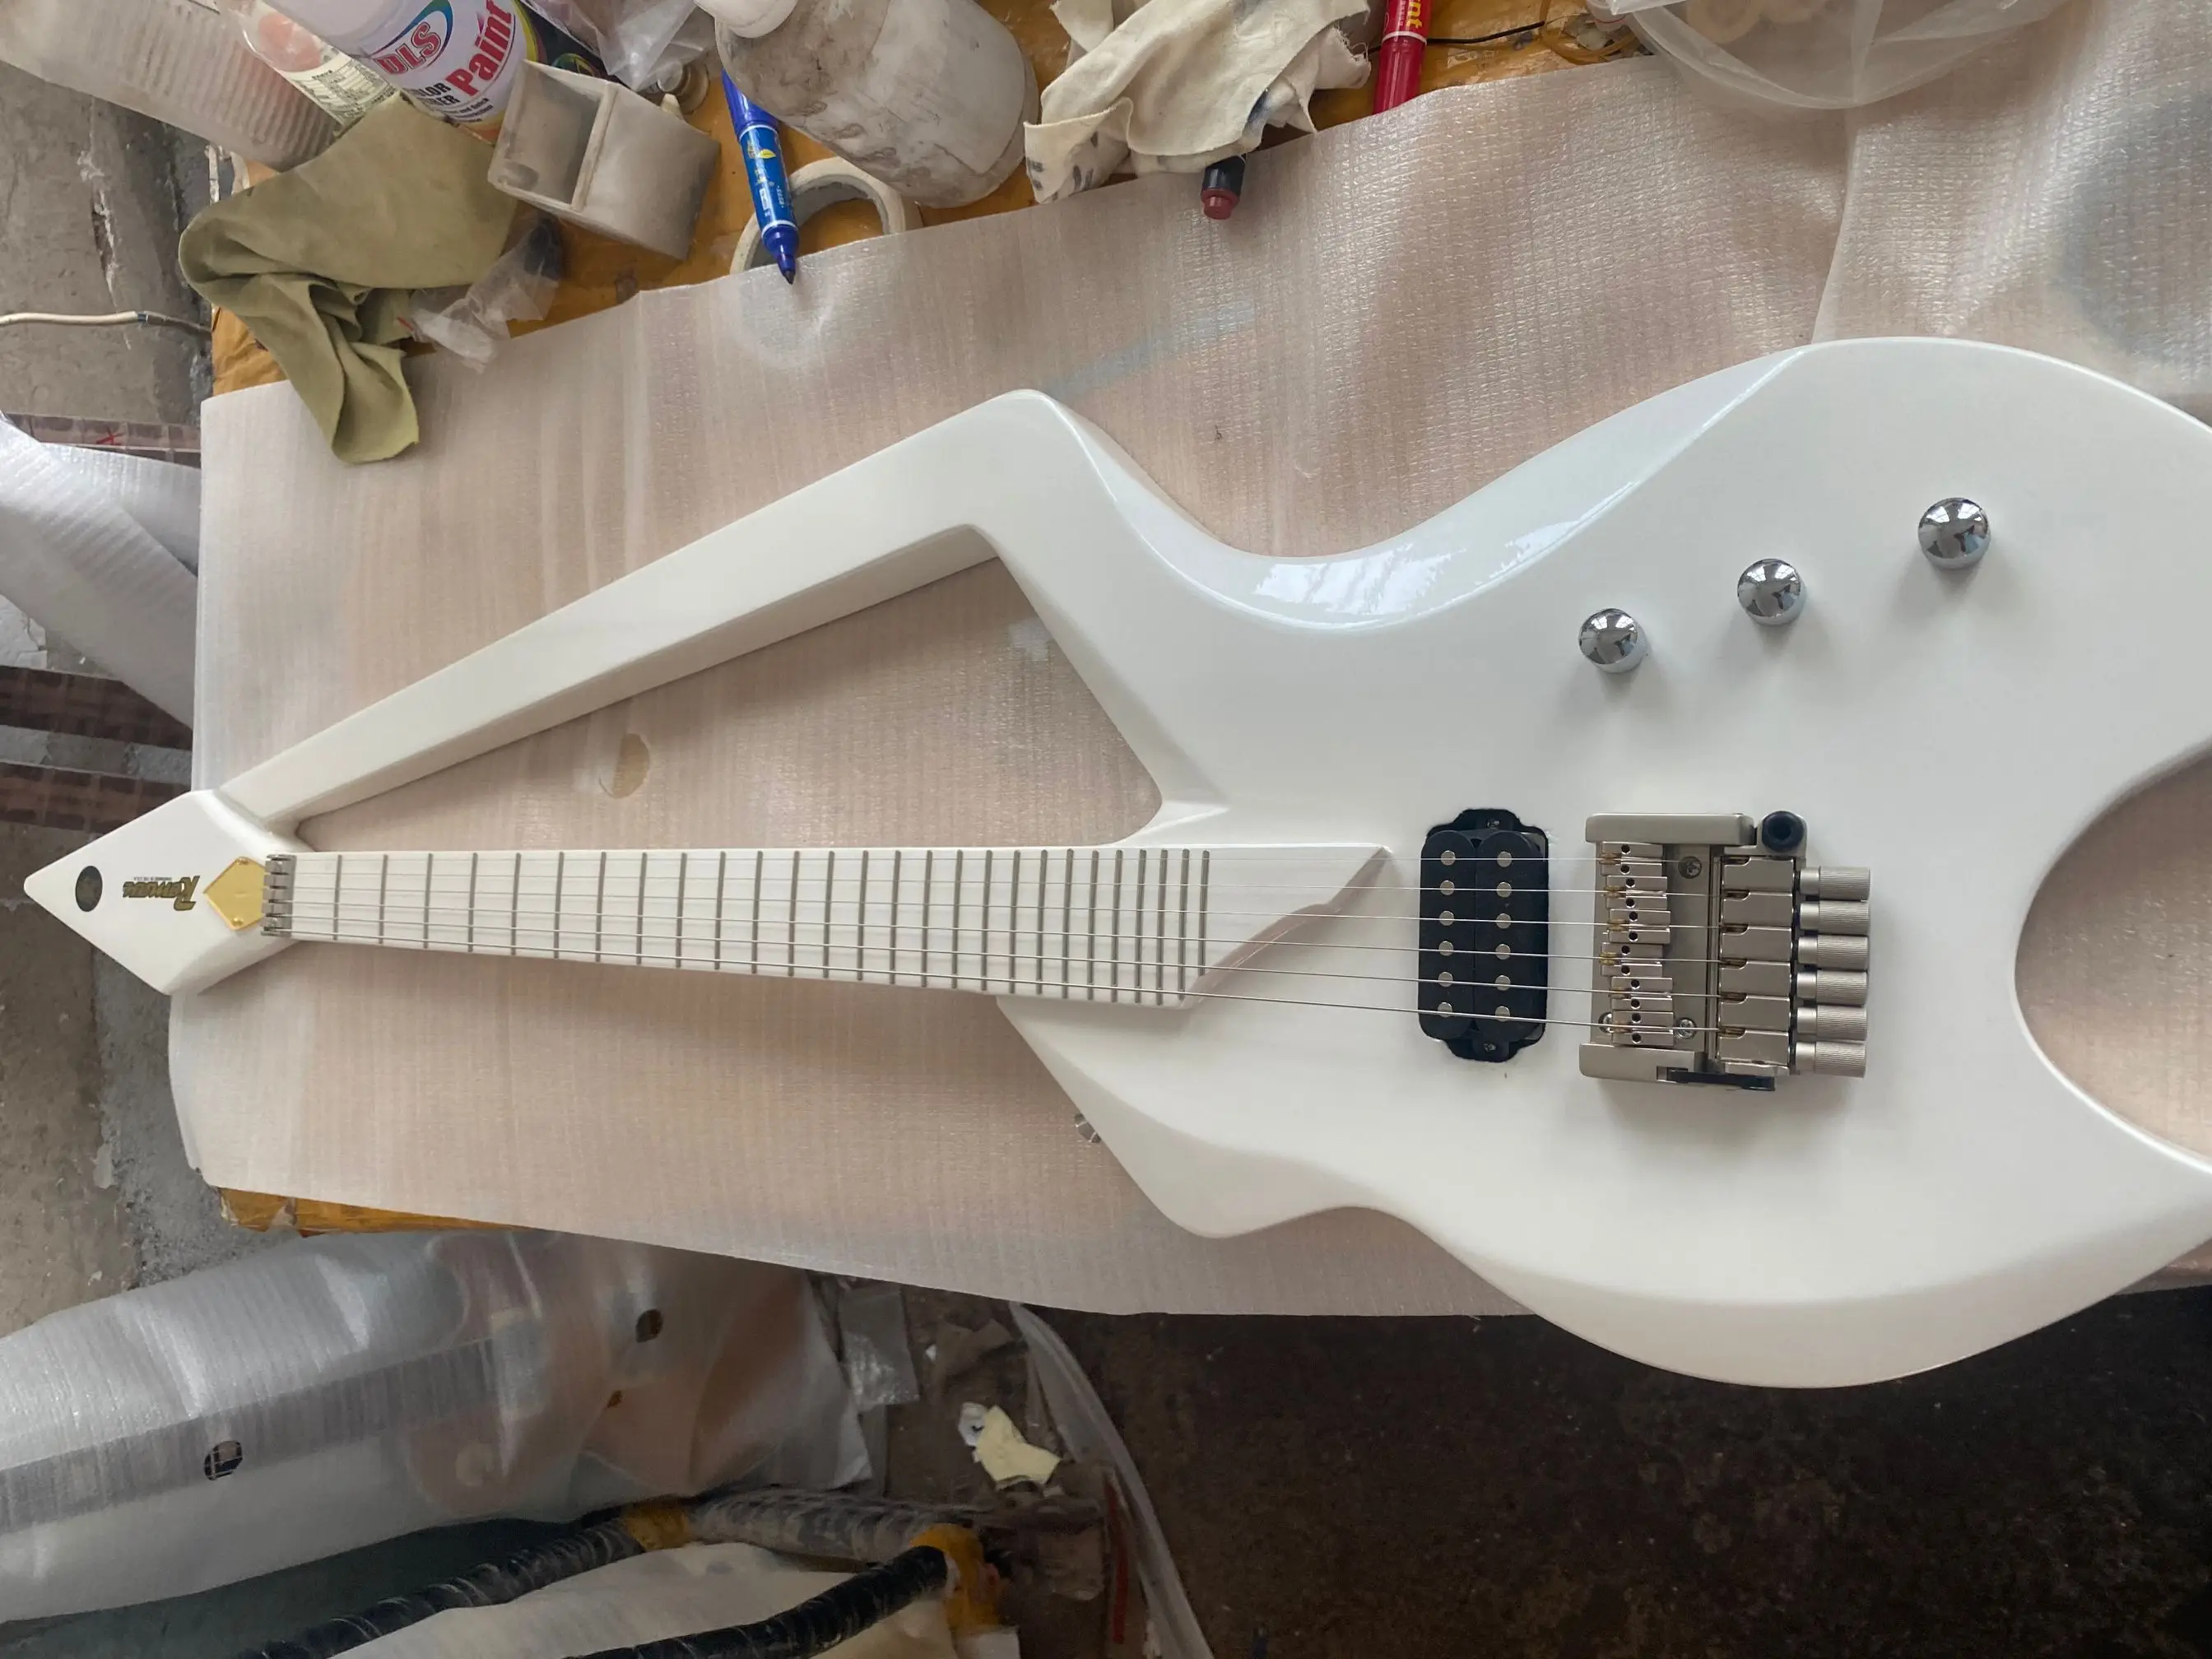 

Prince Jerry Auerswald Designed Unique Model C Guitar White Electric Guitar Tremolo Bridge, Gold Hardware, Multi Color Available